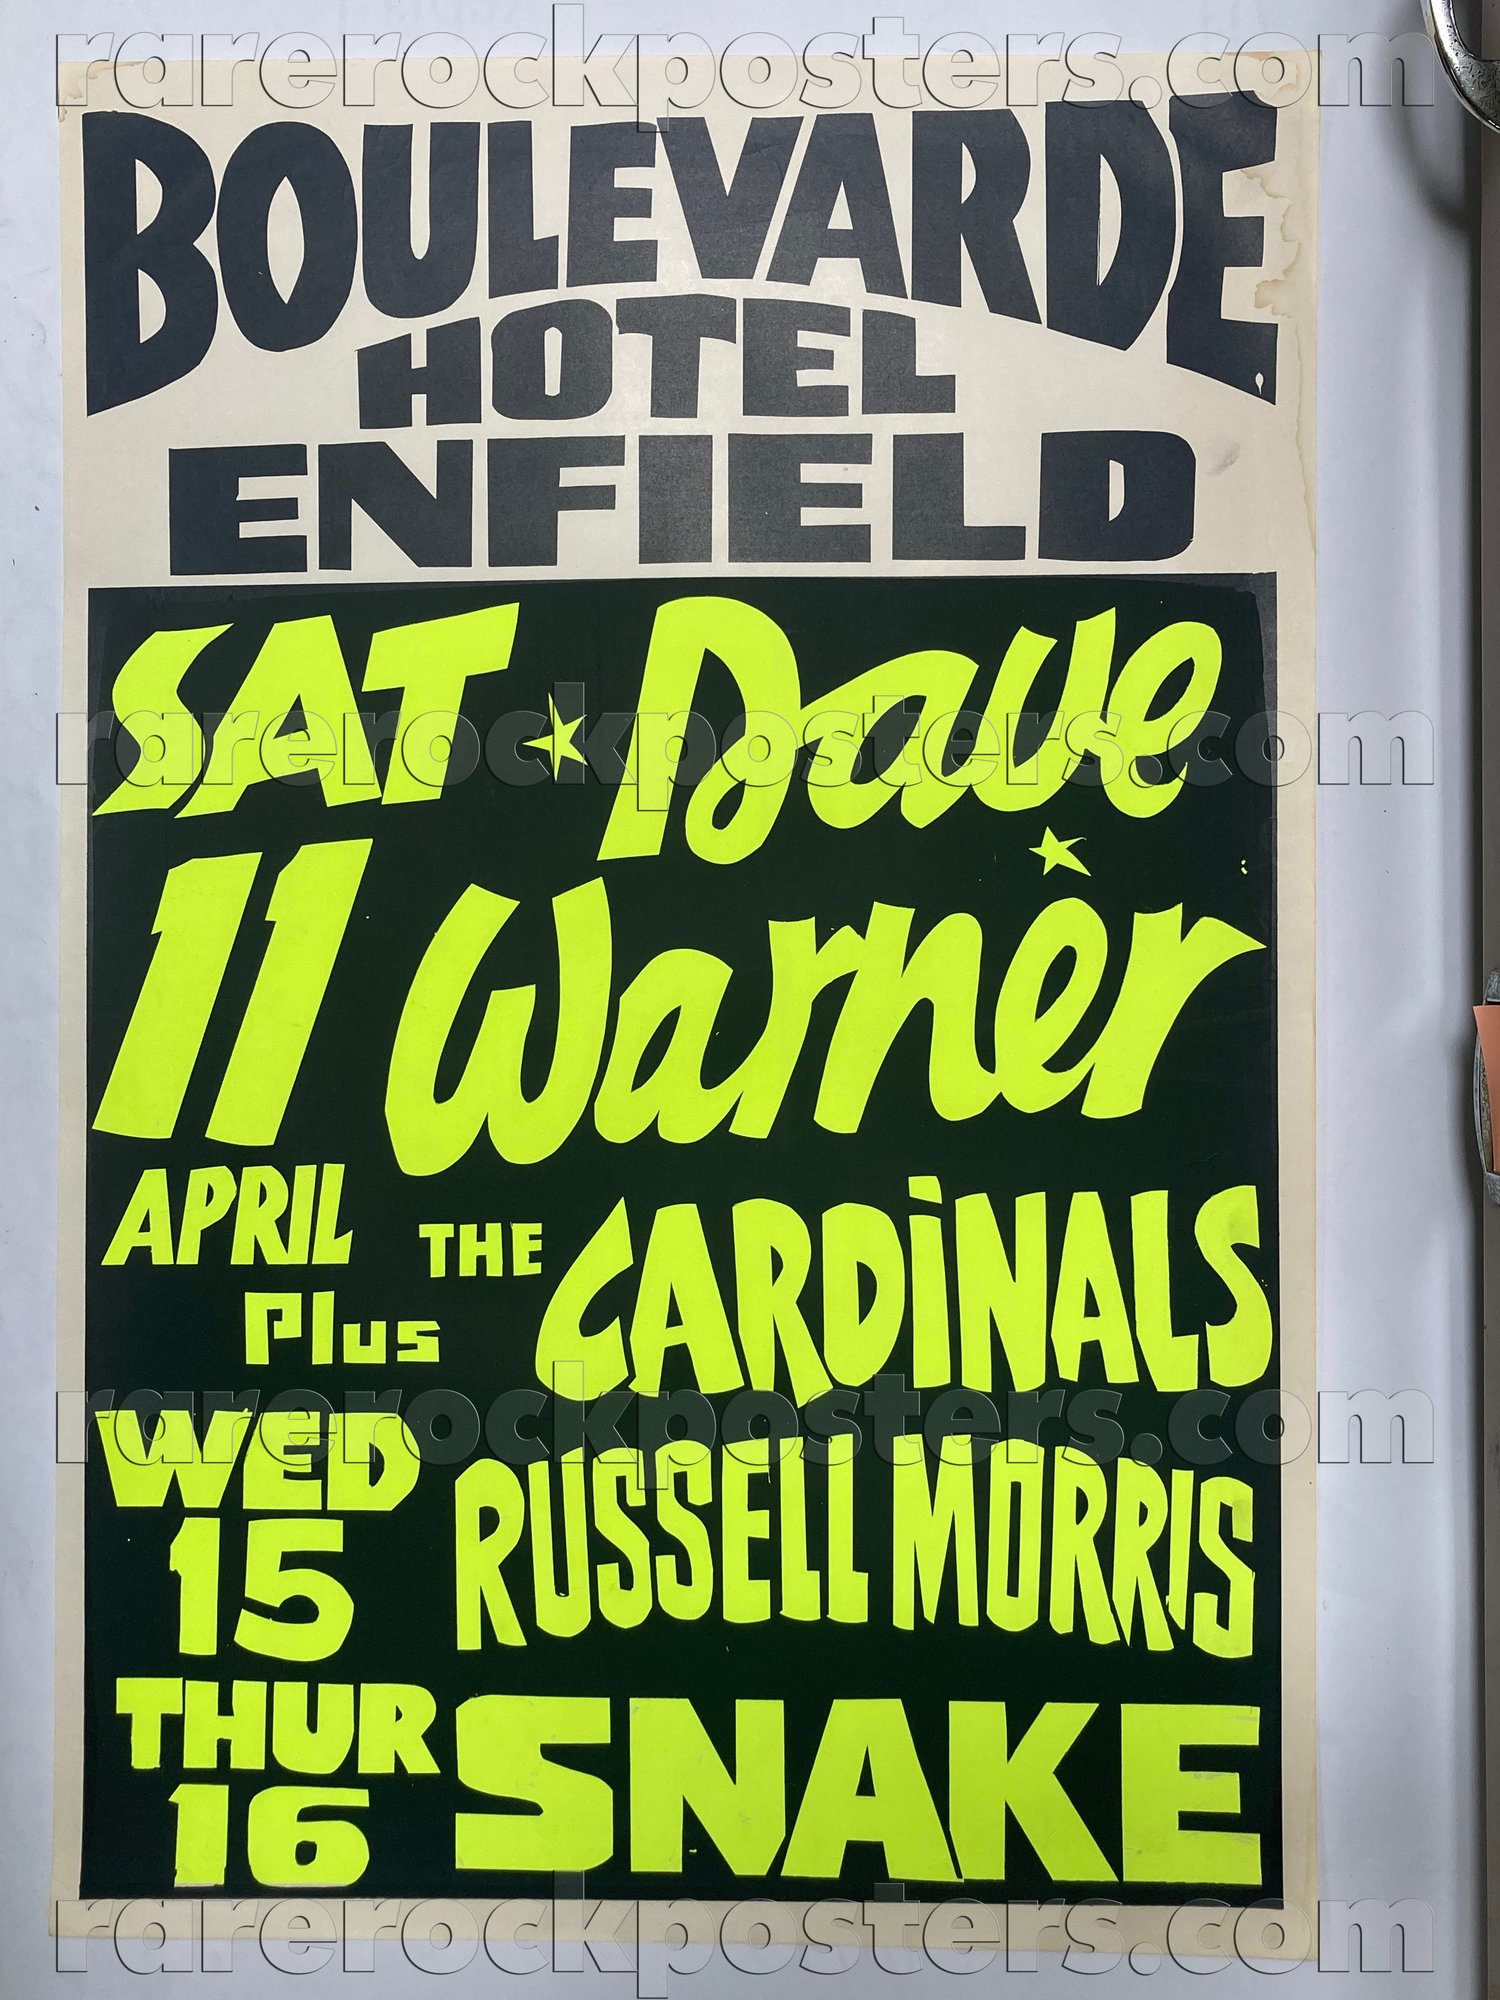 DAVE WARNER / RUSSELL MORRIS / SNAKE ~ ORIGINAL 1980 AUSTRALIAN GIG POSTER ~ ENFIELD BLVD ~ SYDNEY